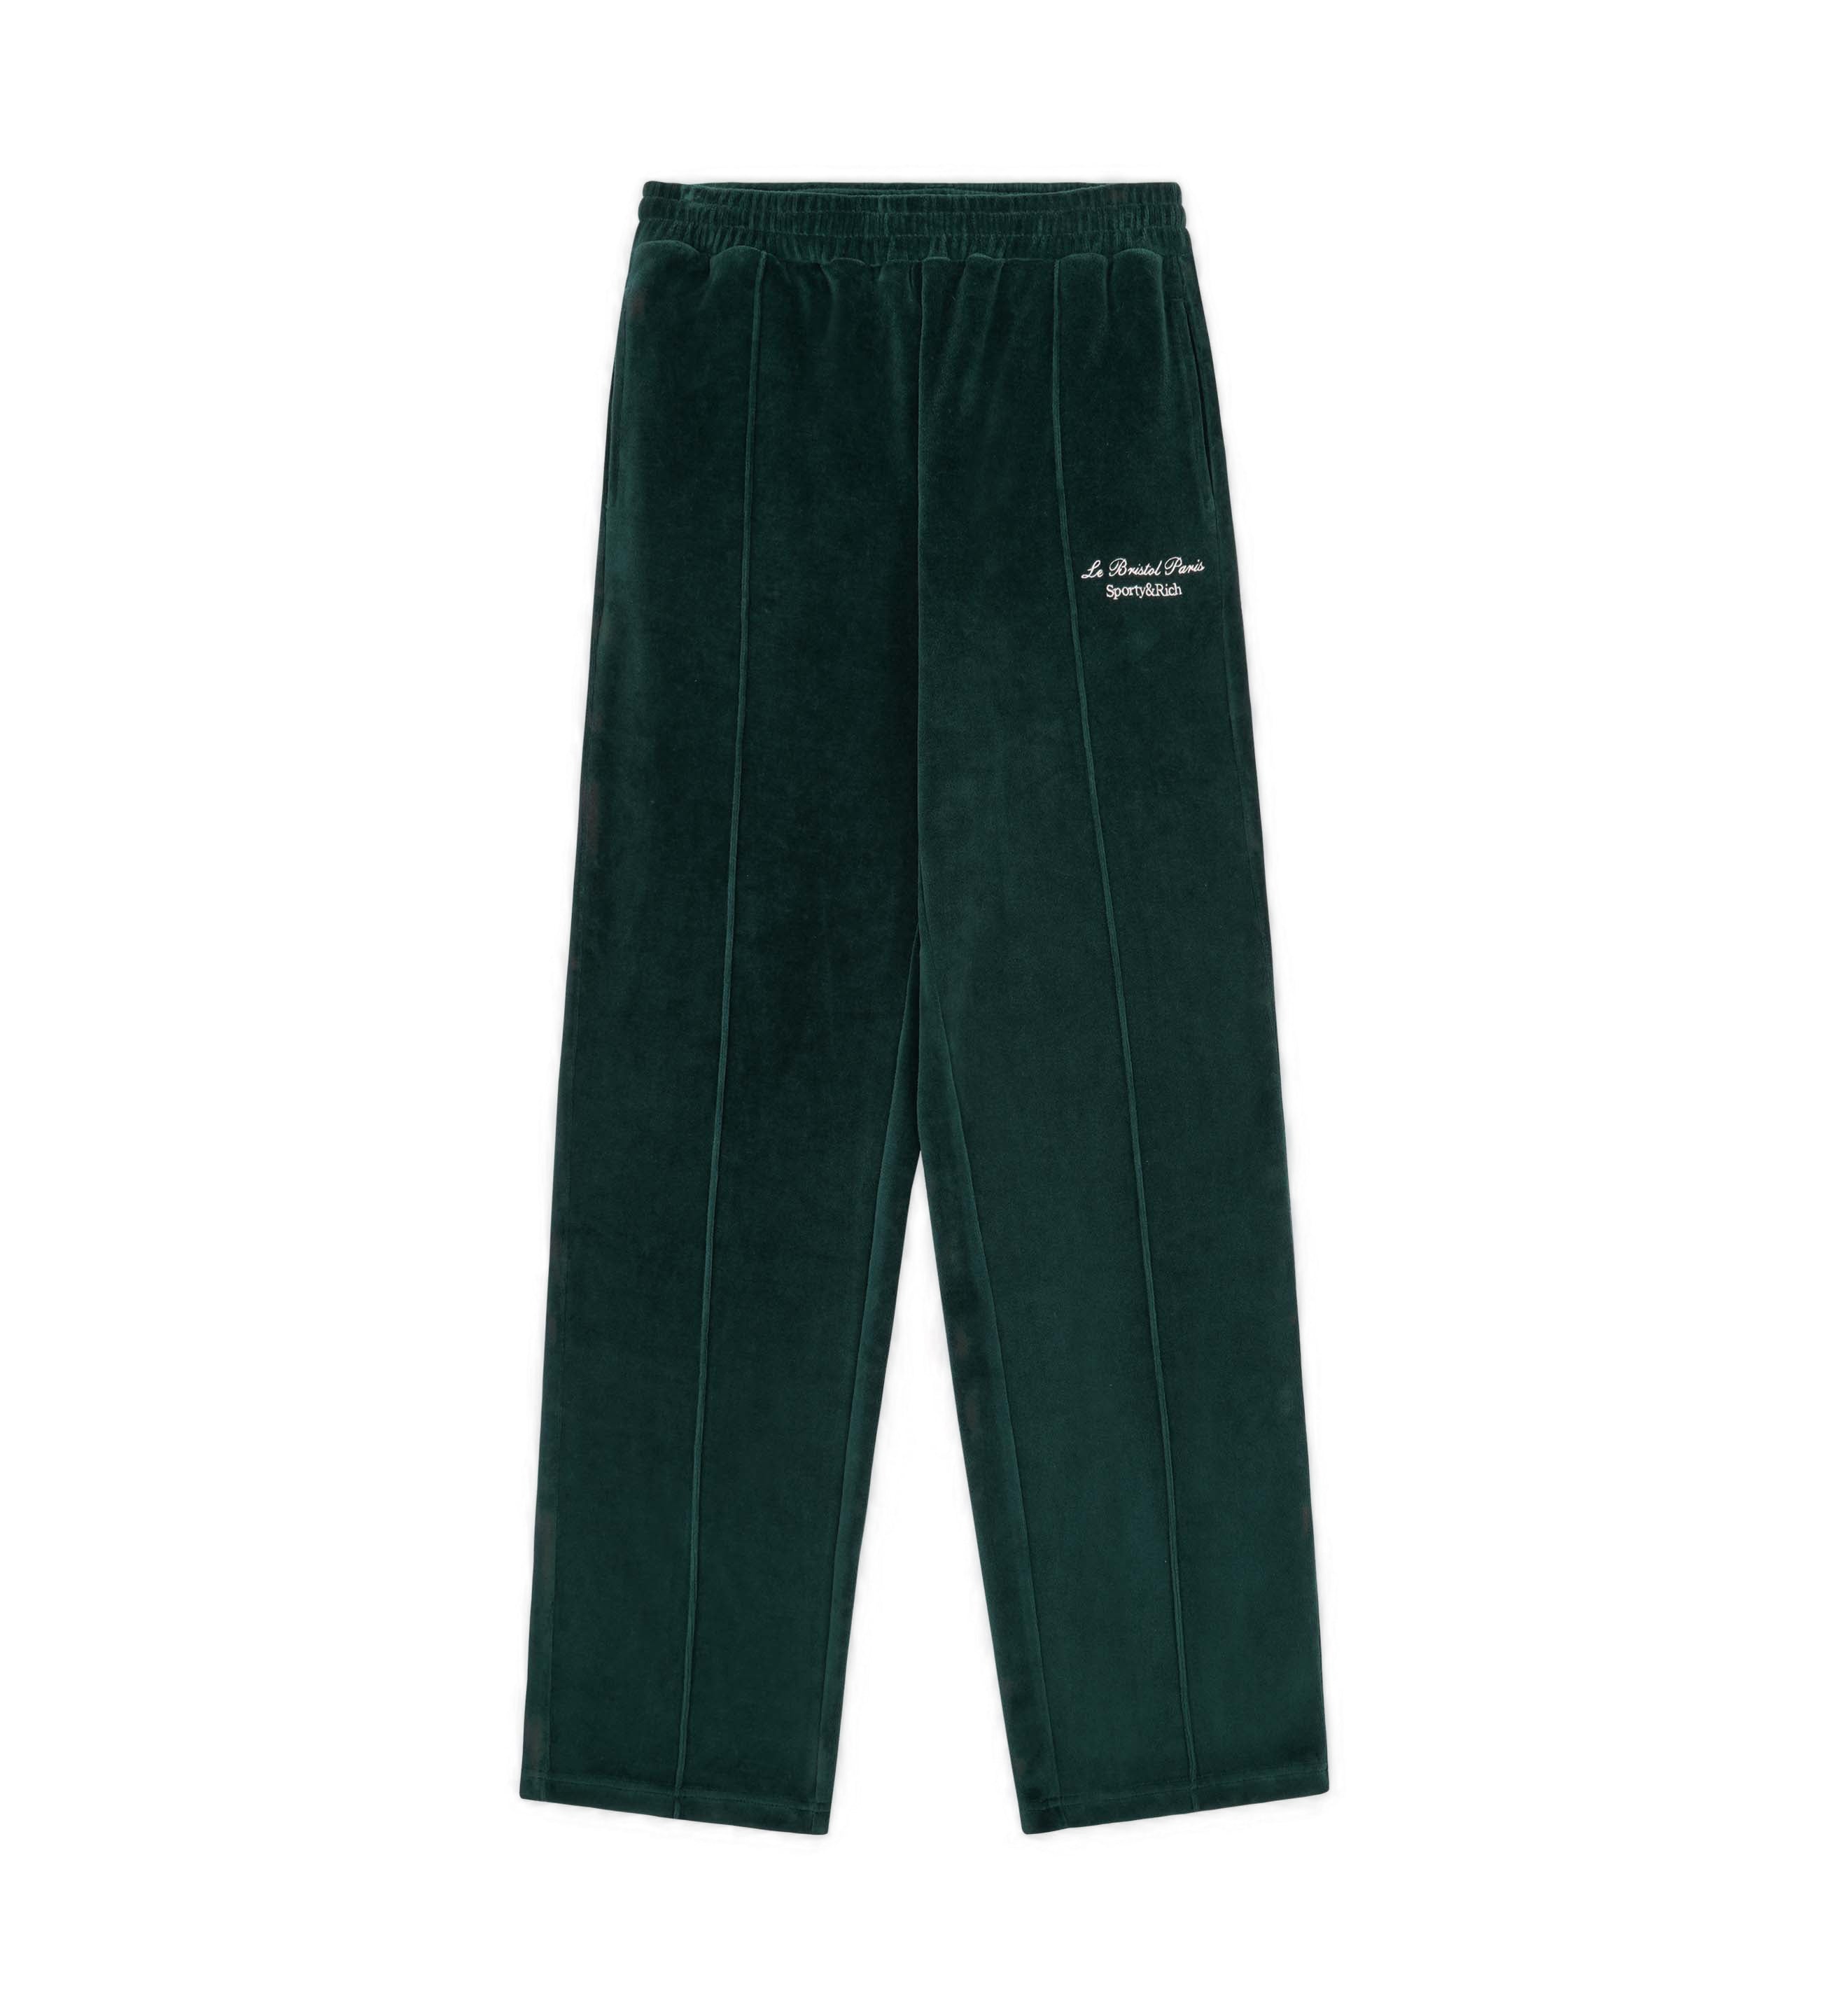 Oetker Collection Boutique Sporty & Rich x Le Bristol Green Velour Trousers